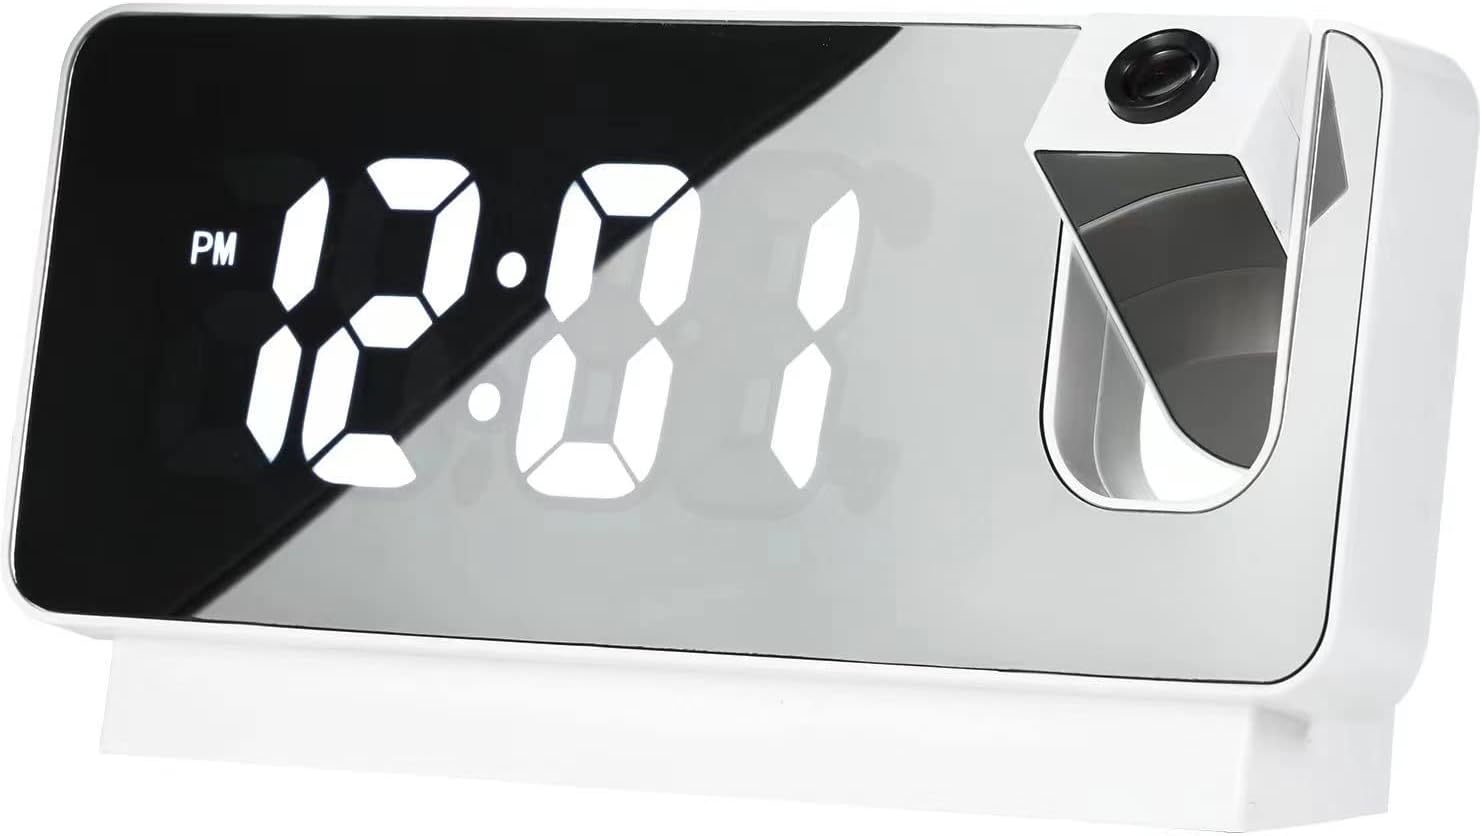 BAOTOP Projection Digital Alarm Clock for Bedroom with [...]